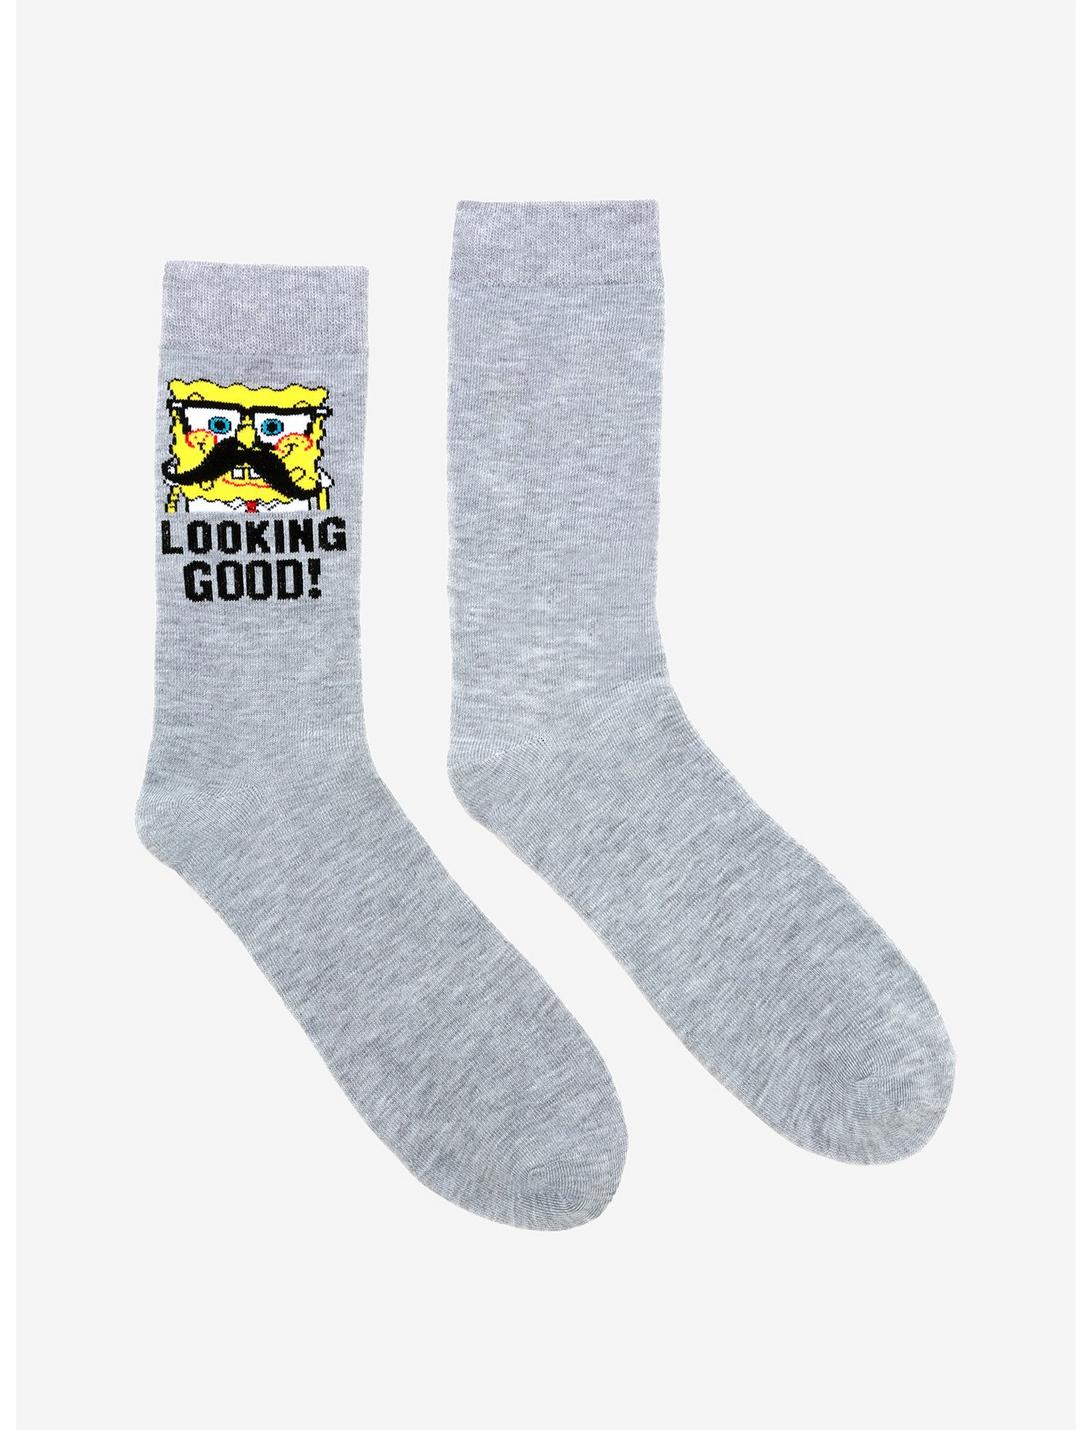 SpongeBob SquarePants Mustache Crew Socks, , hi-res